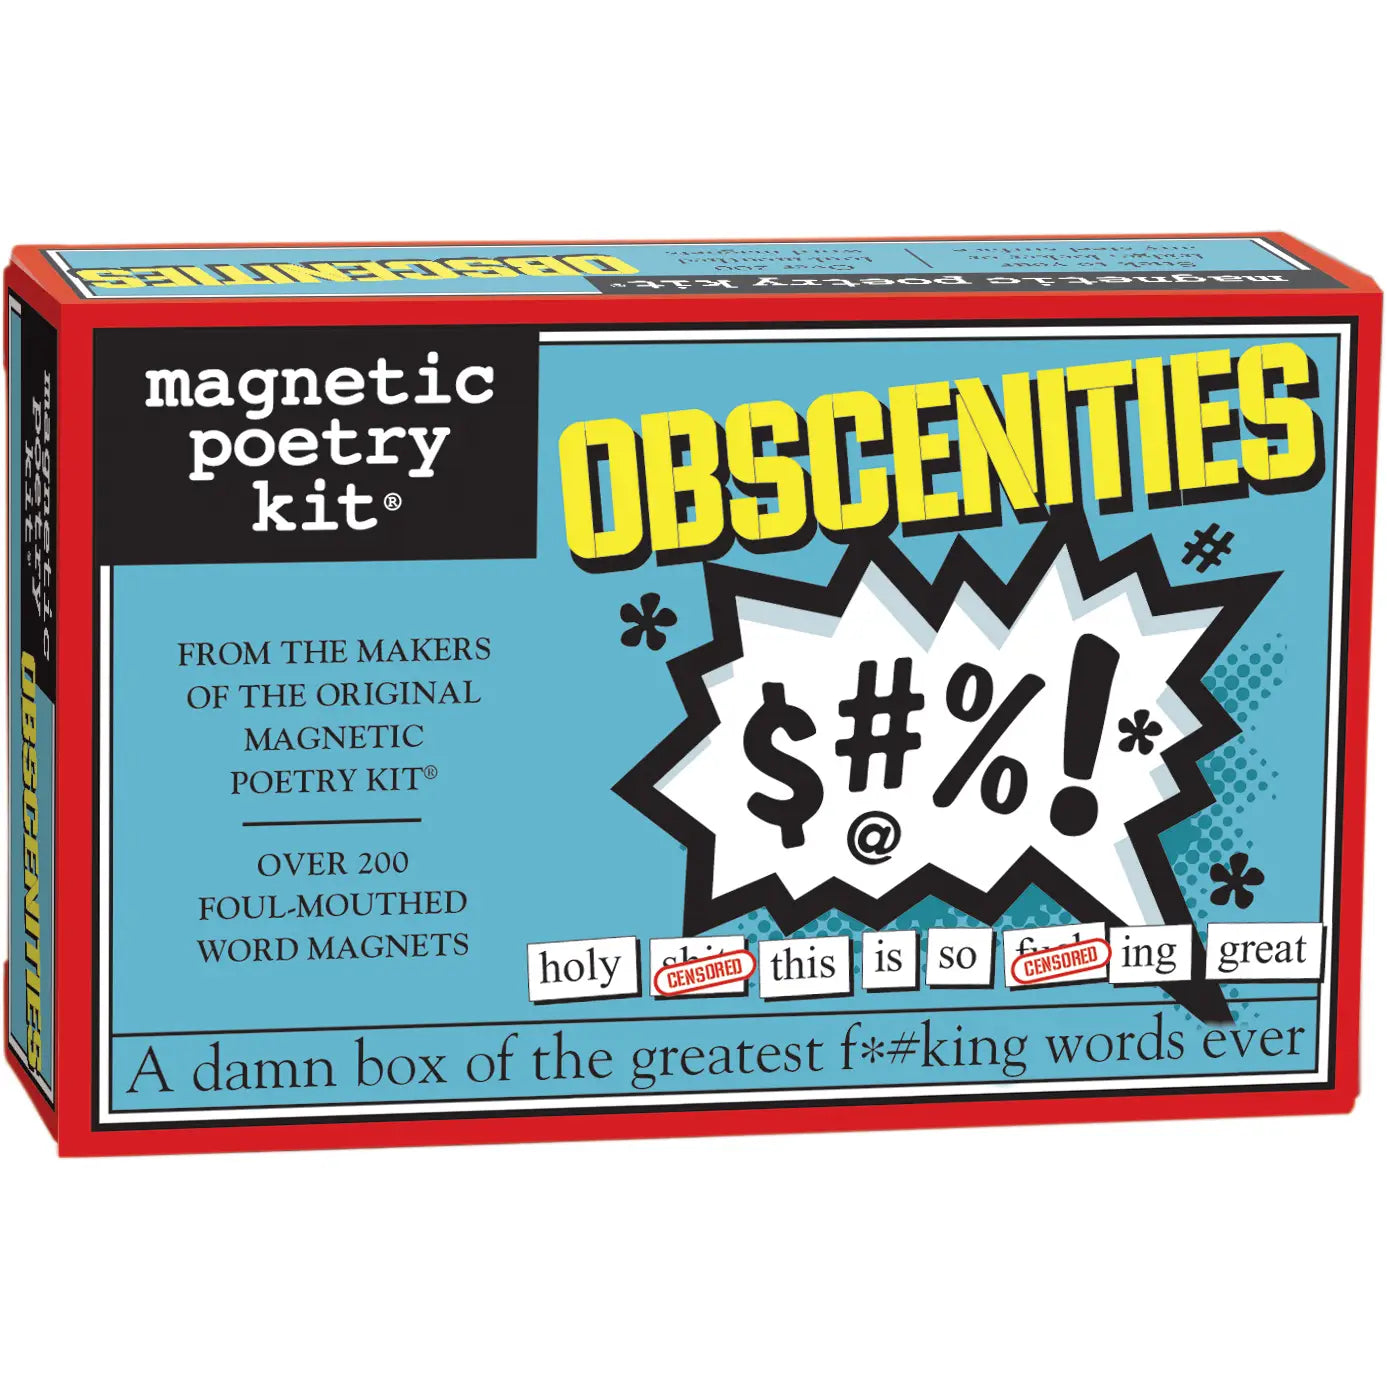 Obscenities Magnetic Poetry Kit